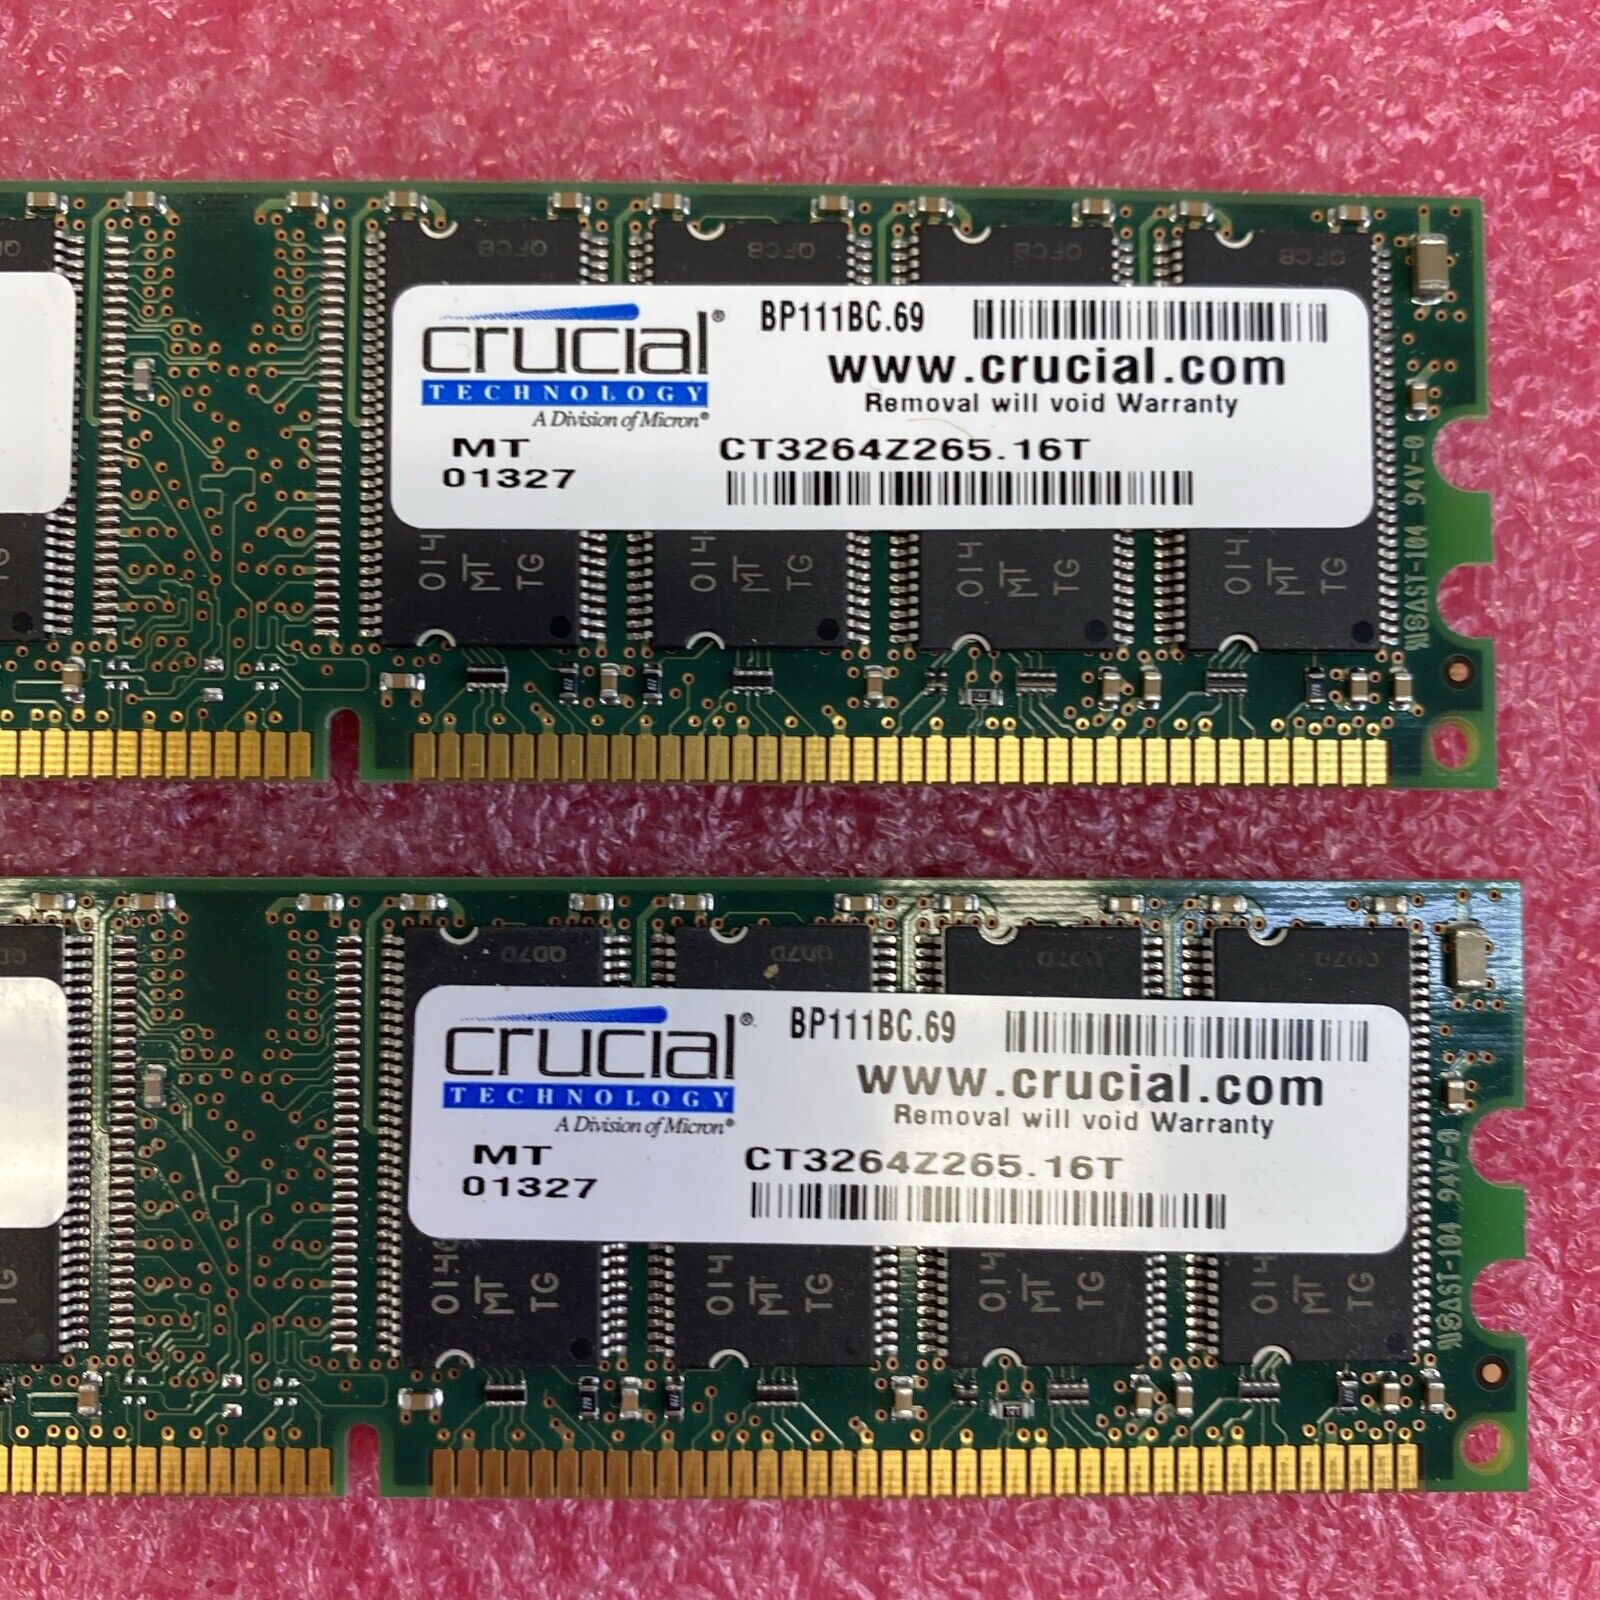 2x 256MB Micron MT16VDDT3264AG-265A1 PC2100U DDR 266MHz RAM Memory